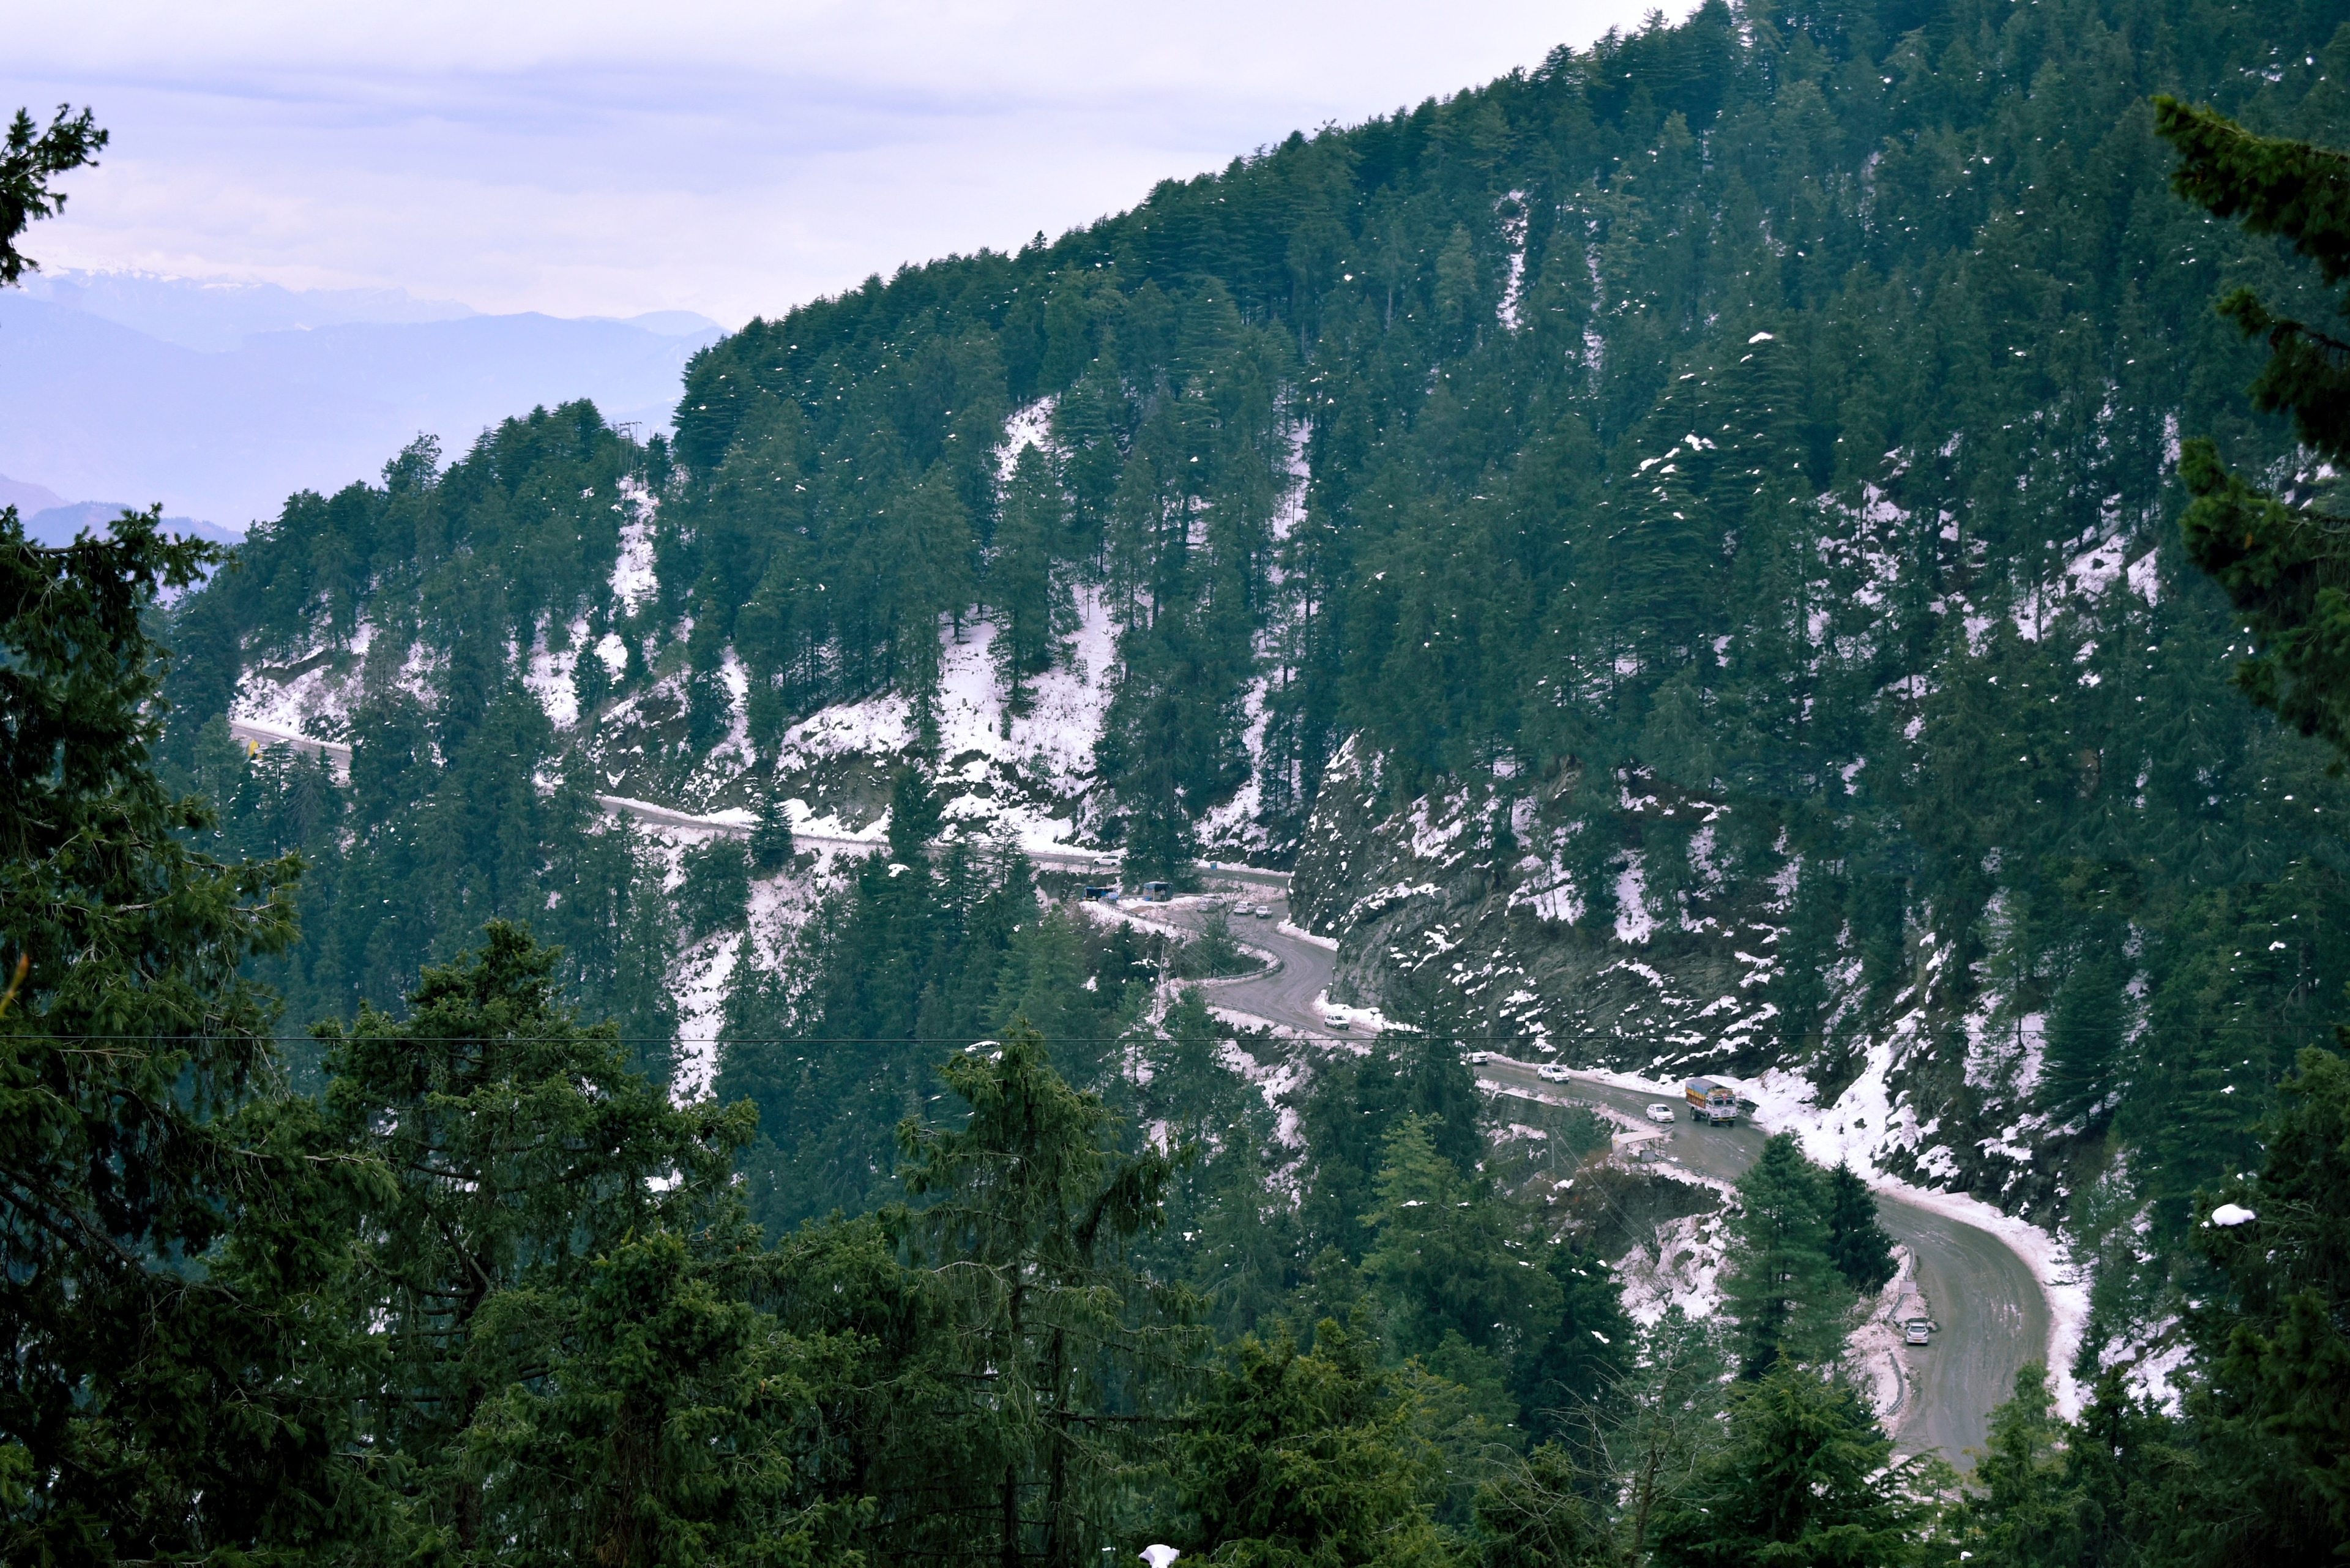 Snowfall in Shimla - Winter Secrets of the Summer Capital of India